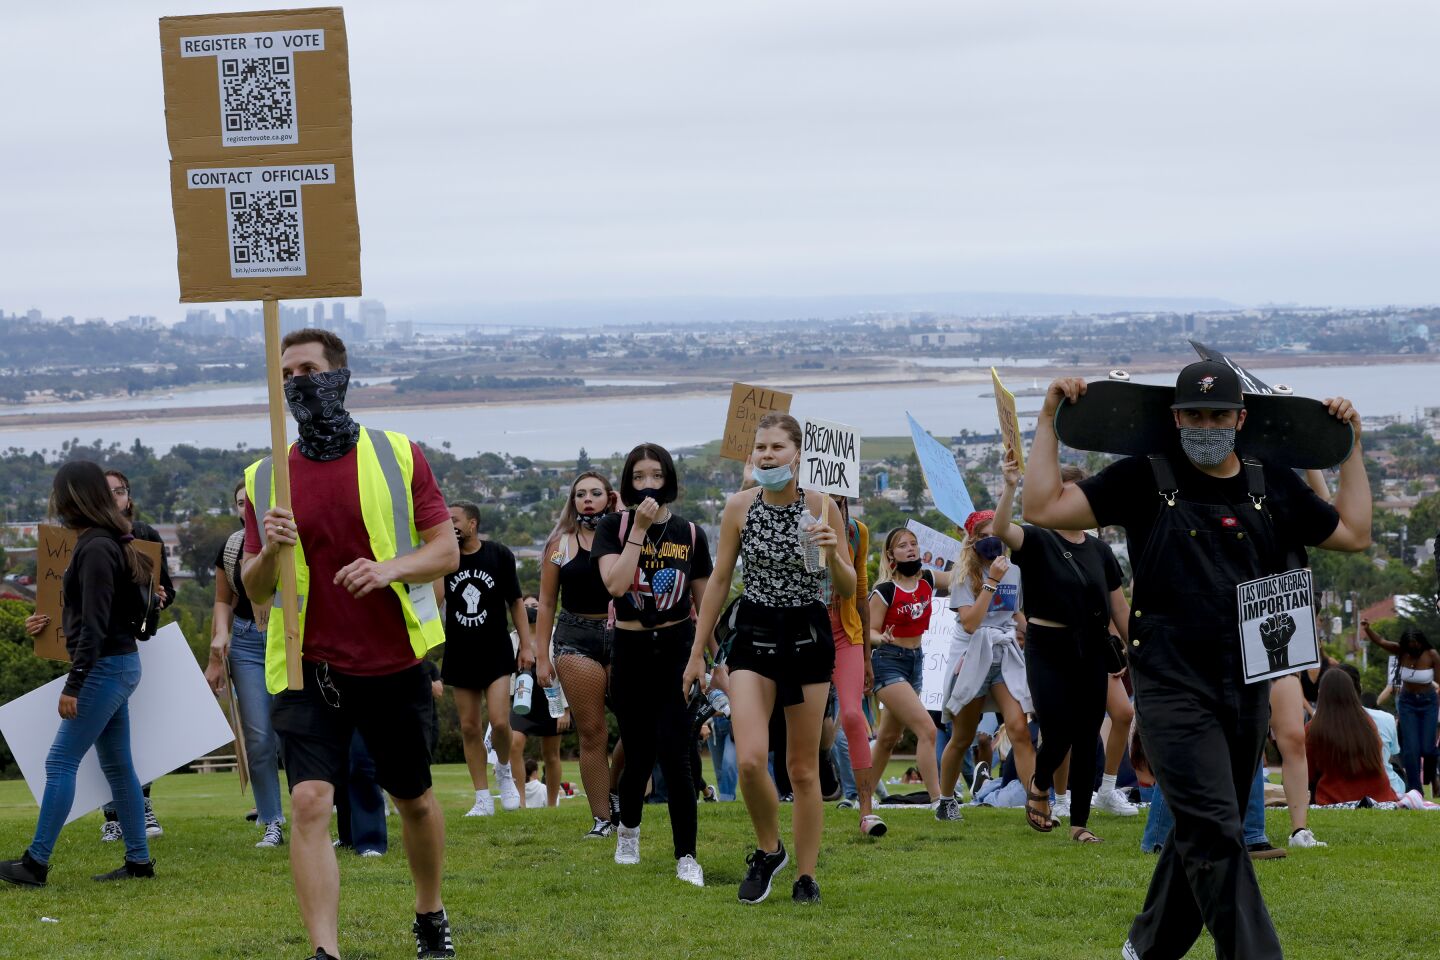 Youth-led ‘Black Lives Matter’ rally draws hundreds to Mount Soledad